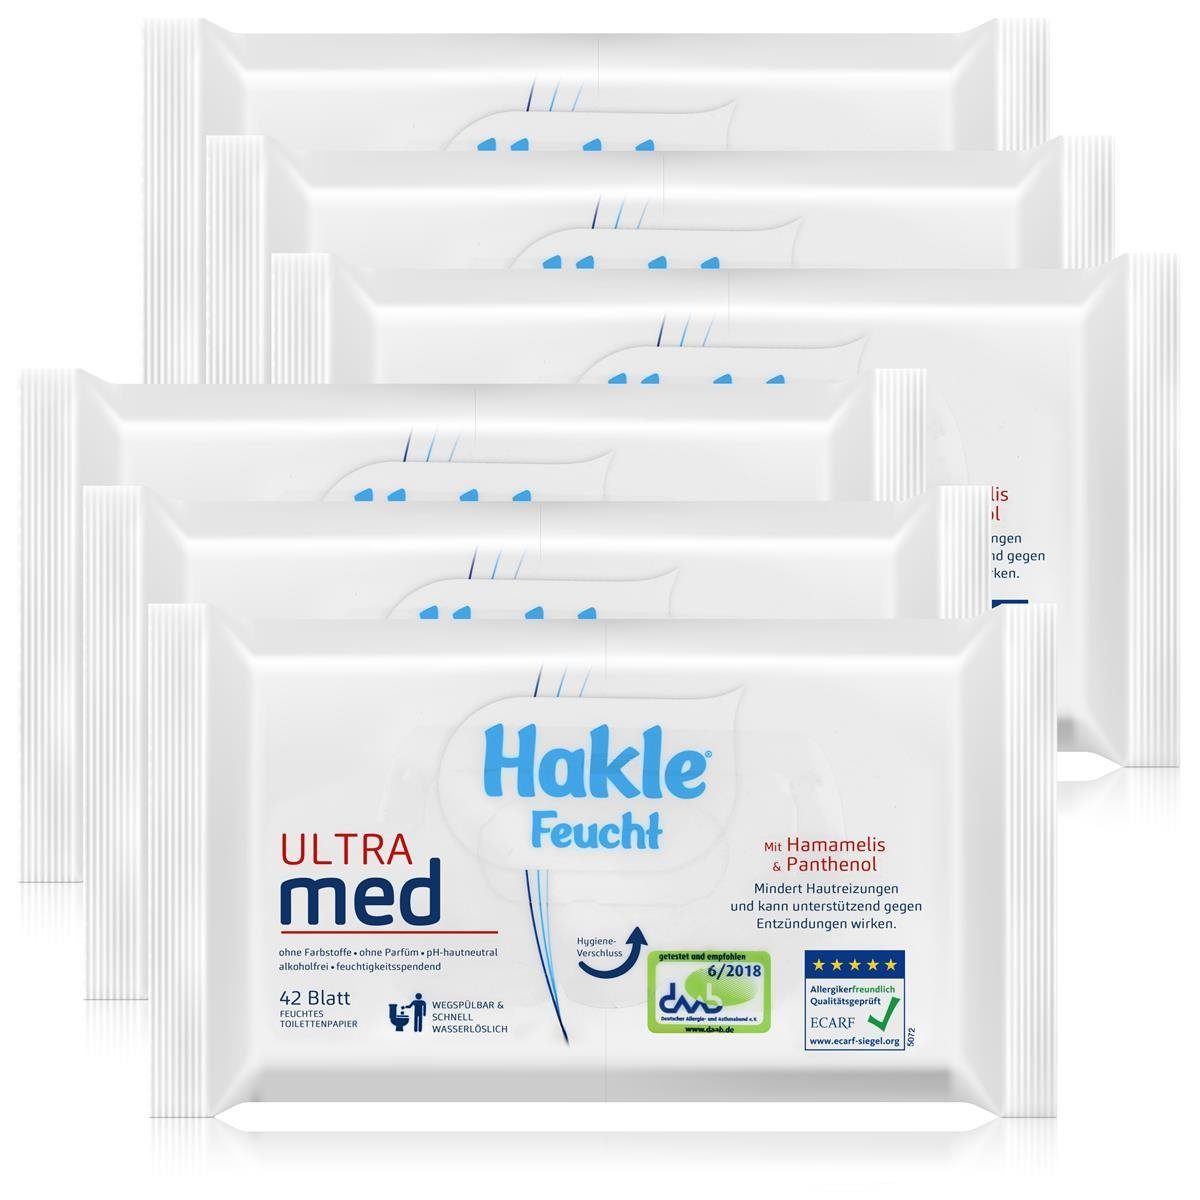 HAKLE feuchtes Toilettenpapier Hakle Feucht Ultra med 42 Blatt - Mit Hamamelis & Panthenol (6er Pack)